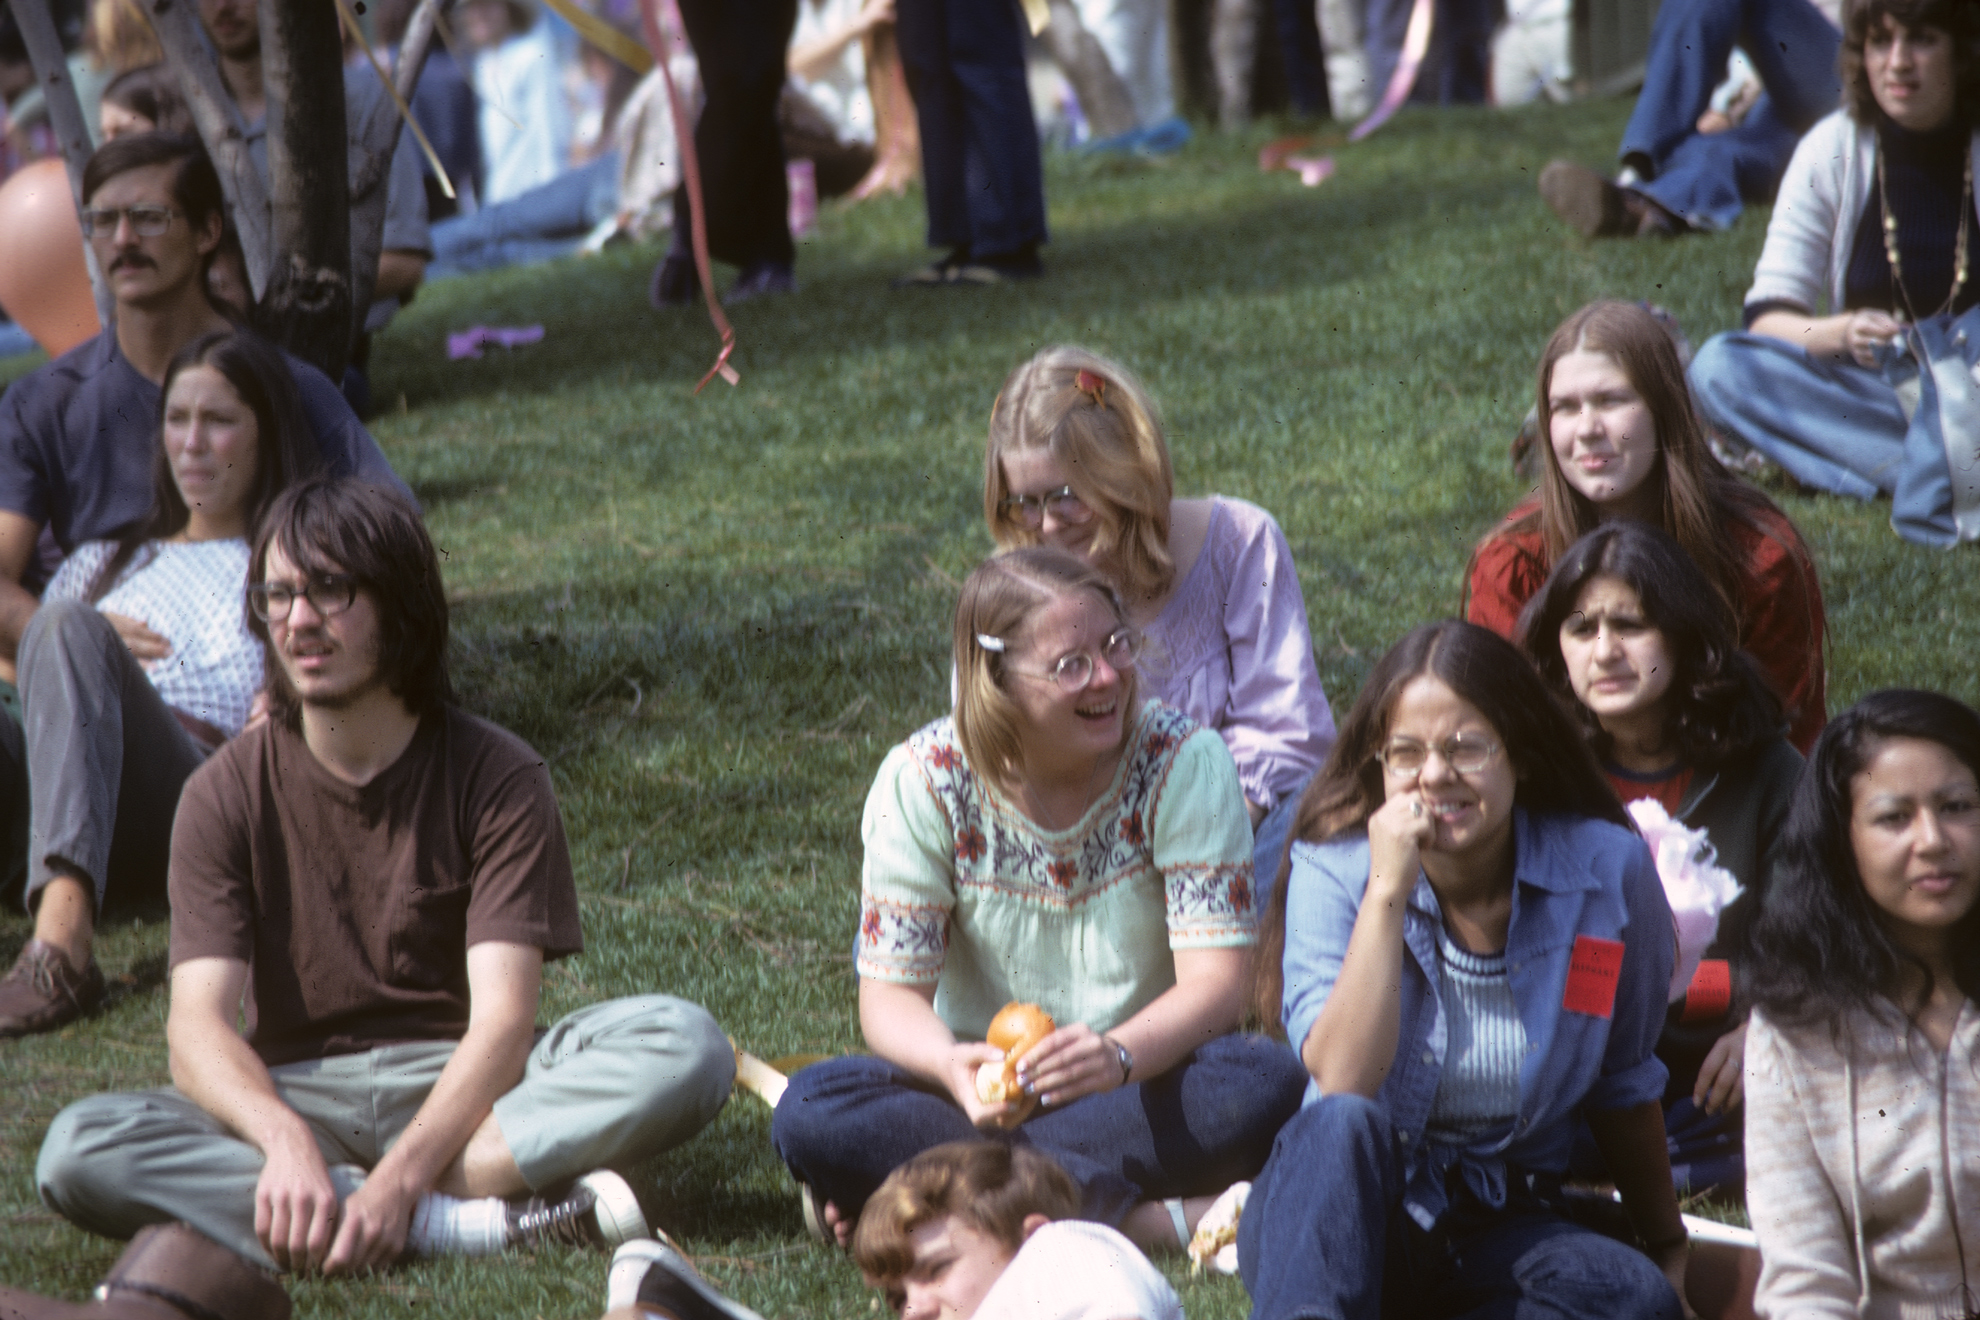 1975 Kohoutek crowd